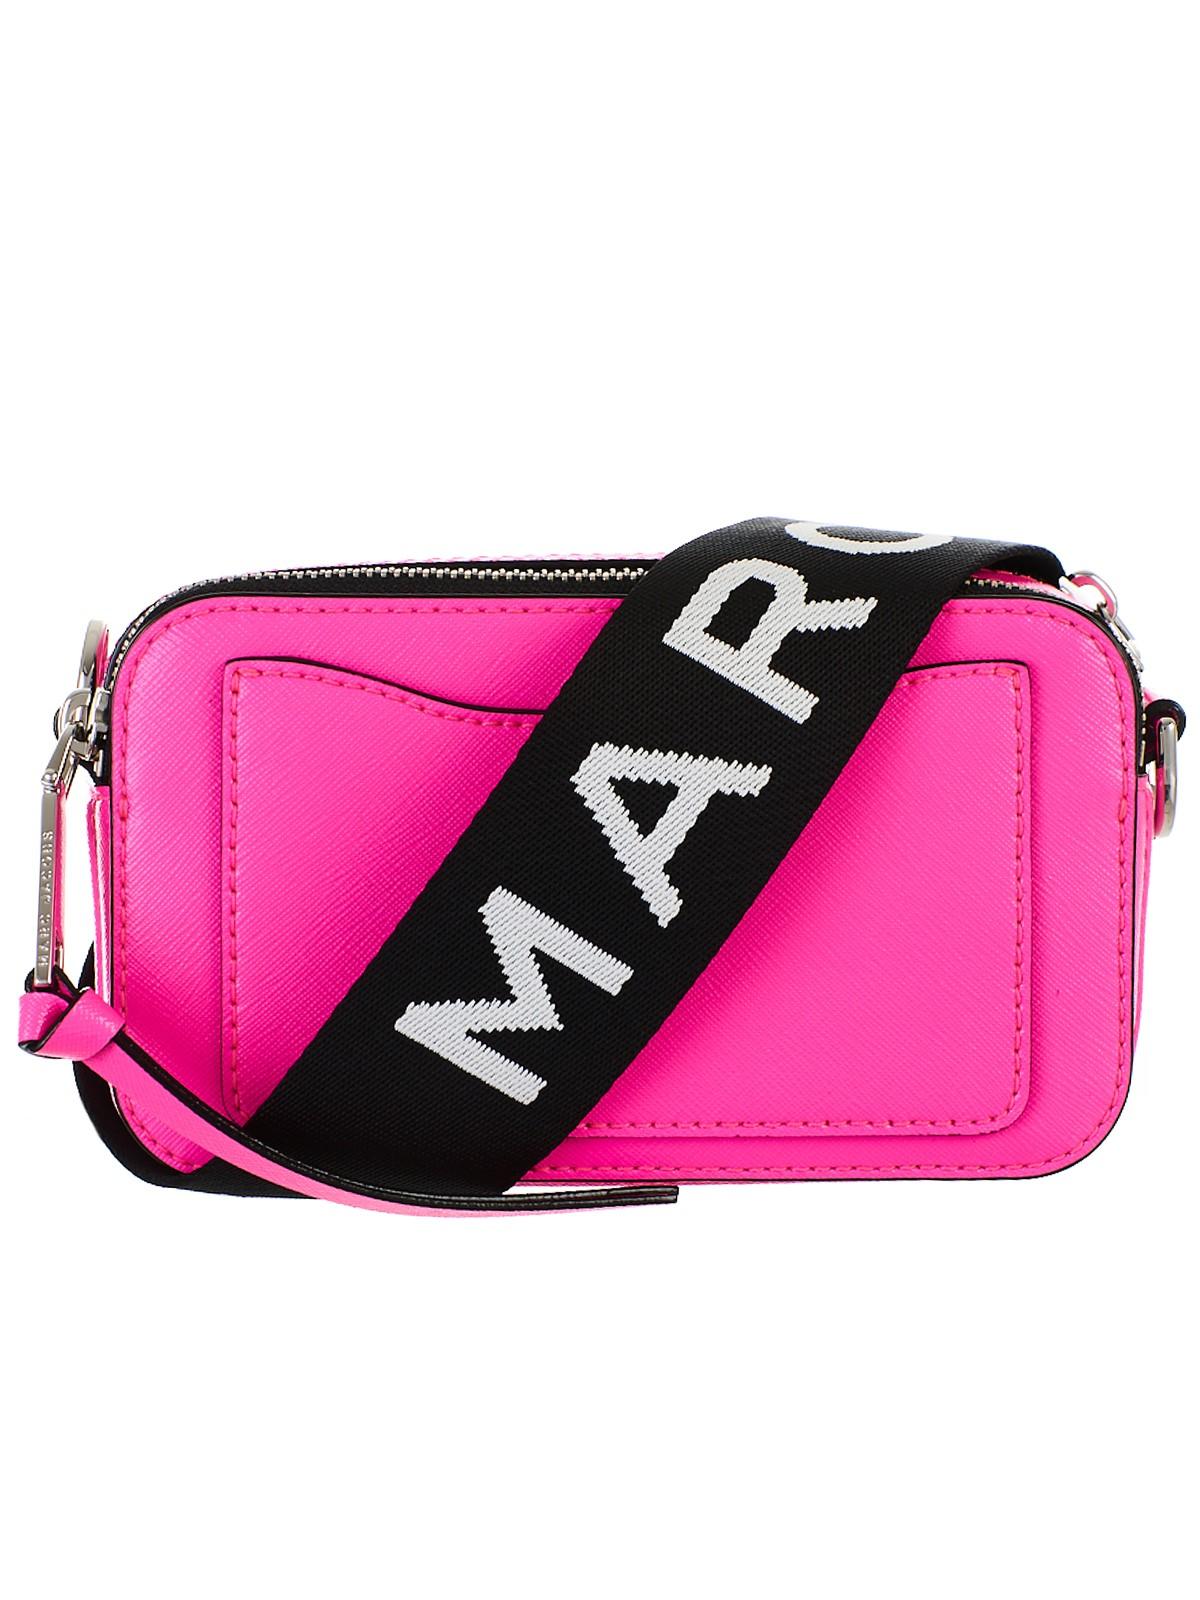 Cross body bags Marc Jacobs - The Snapshot small fuchsia camera bag -  M0012007959